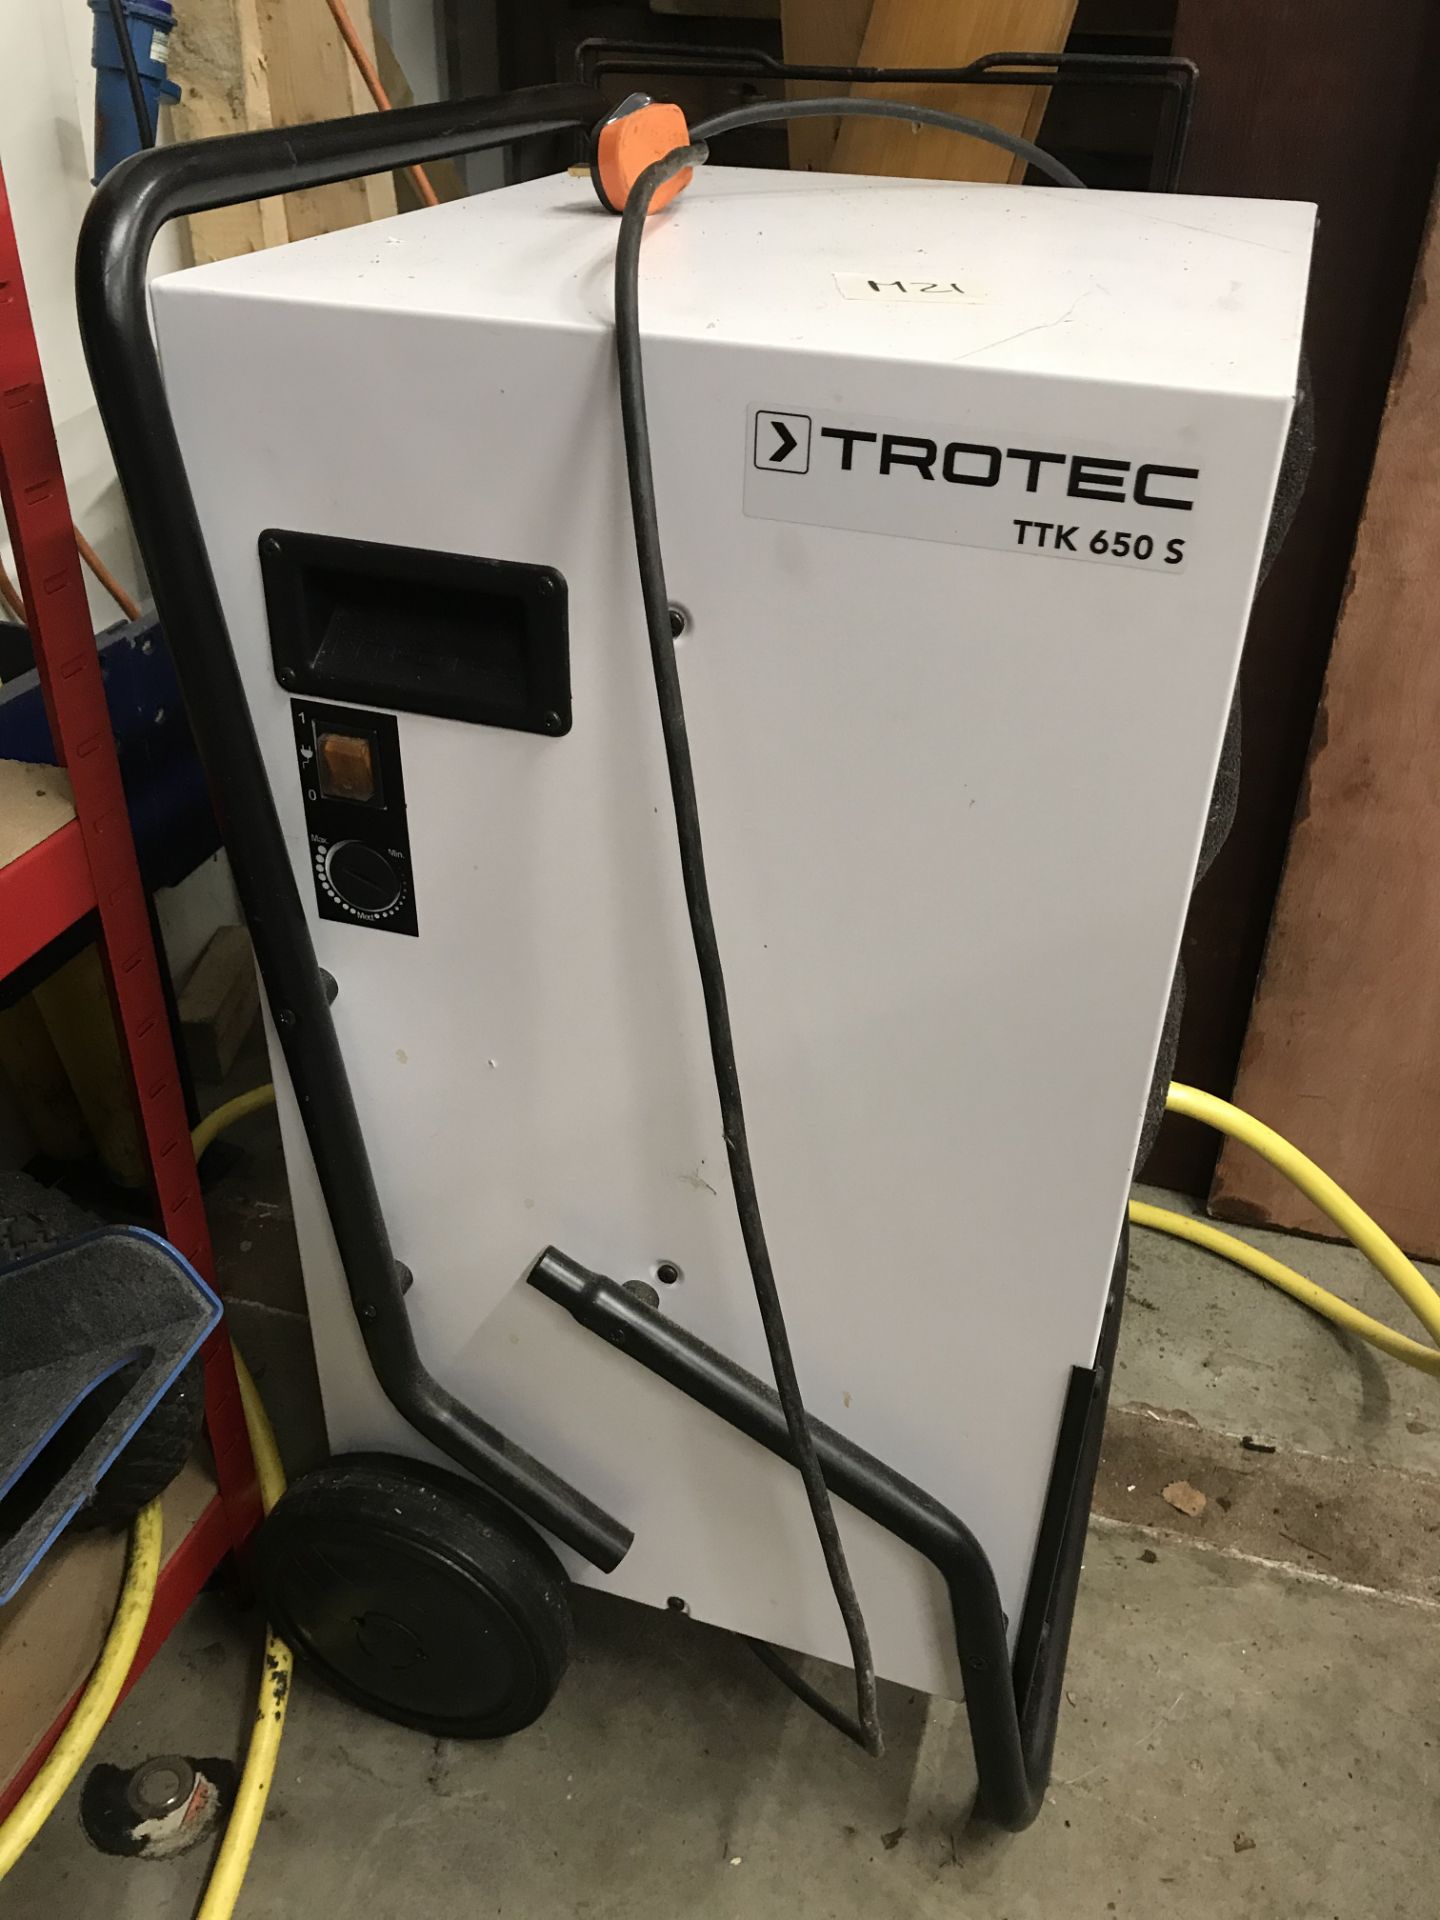 Trotec TTK650S Commercial Dehumidifier